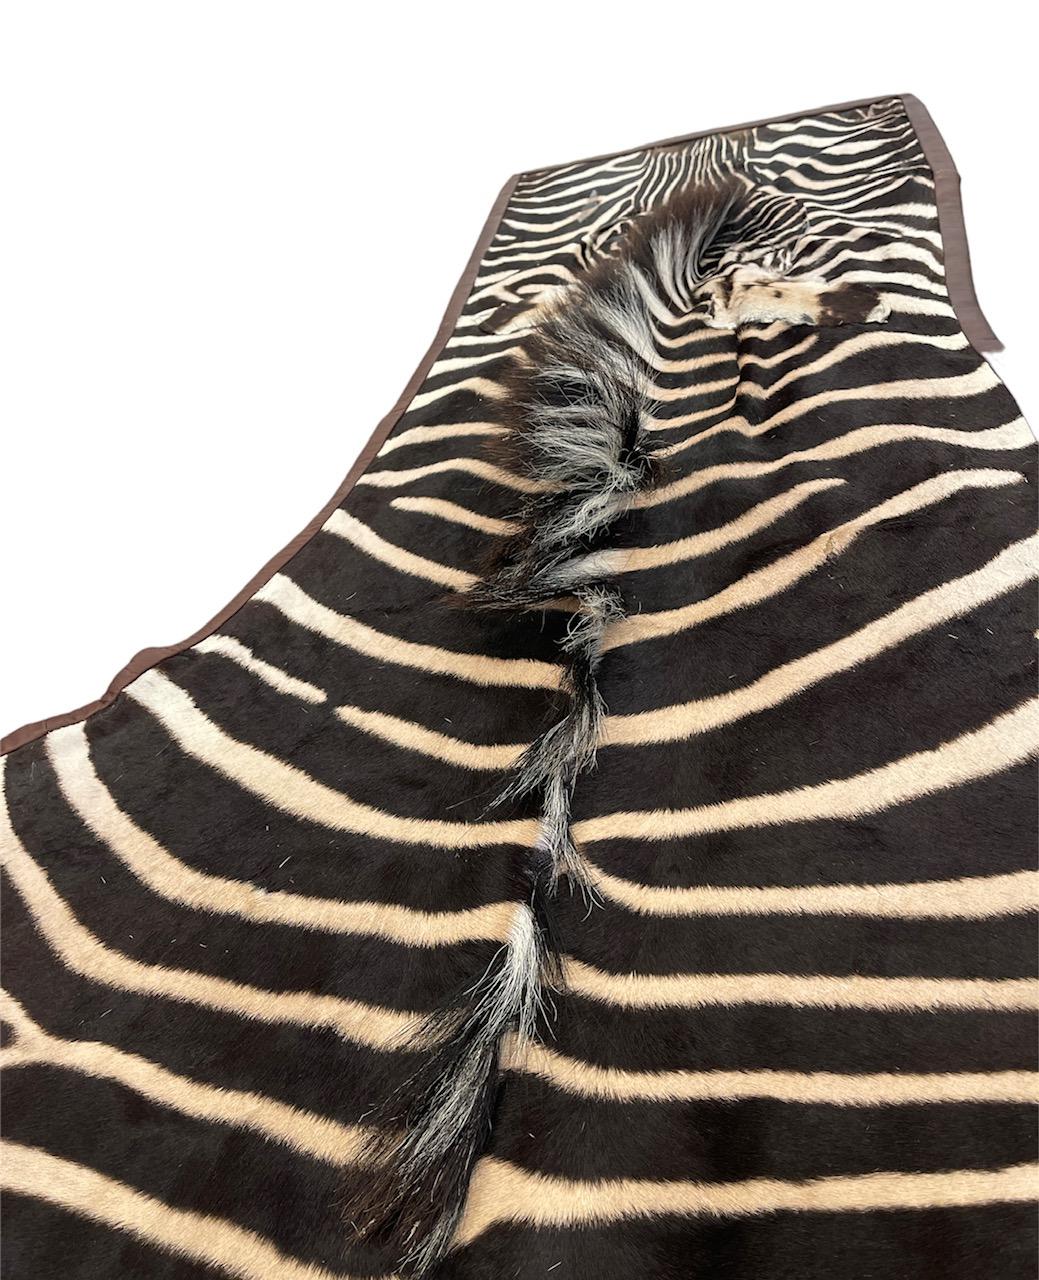 American Gomez Zebra Hide Rug Trimmed in Brown Italian Leather